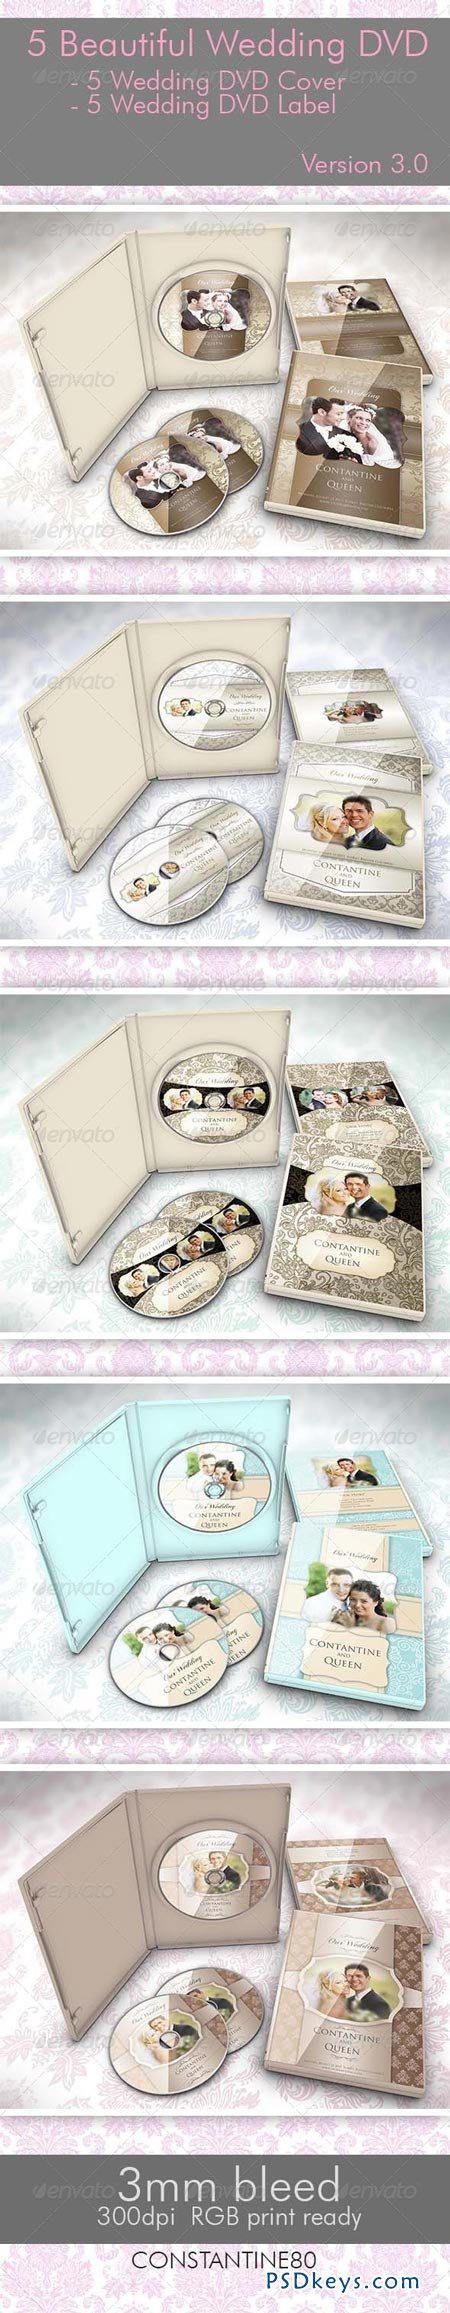 5 Beautiful Wedding DVD Ver 3.0 2761859